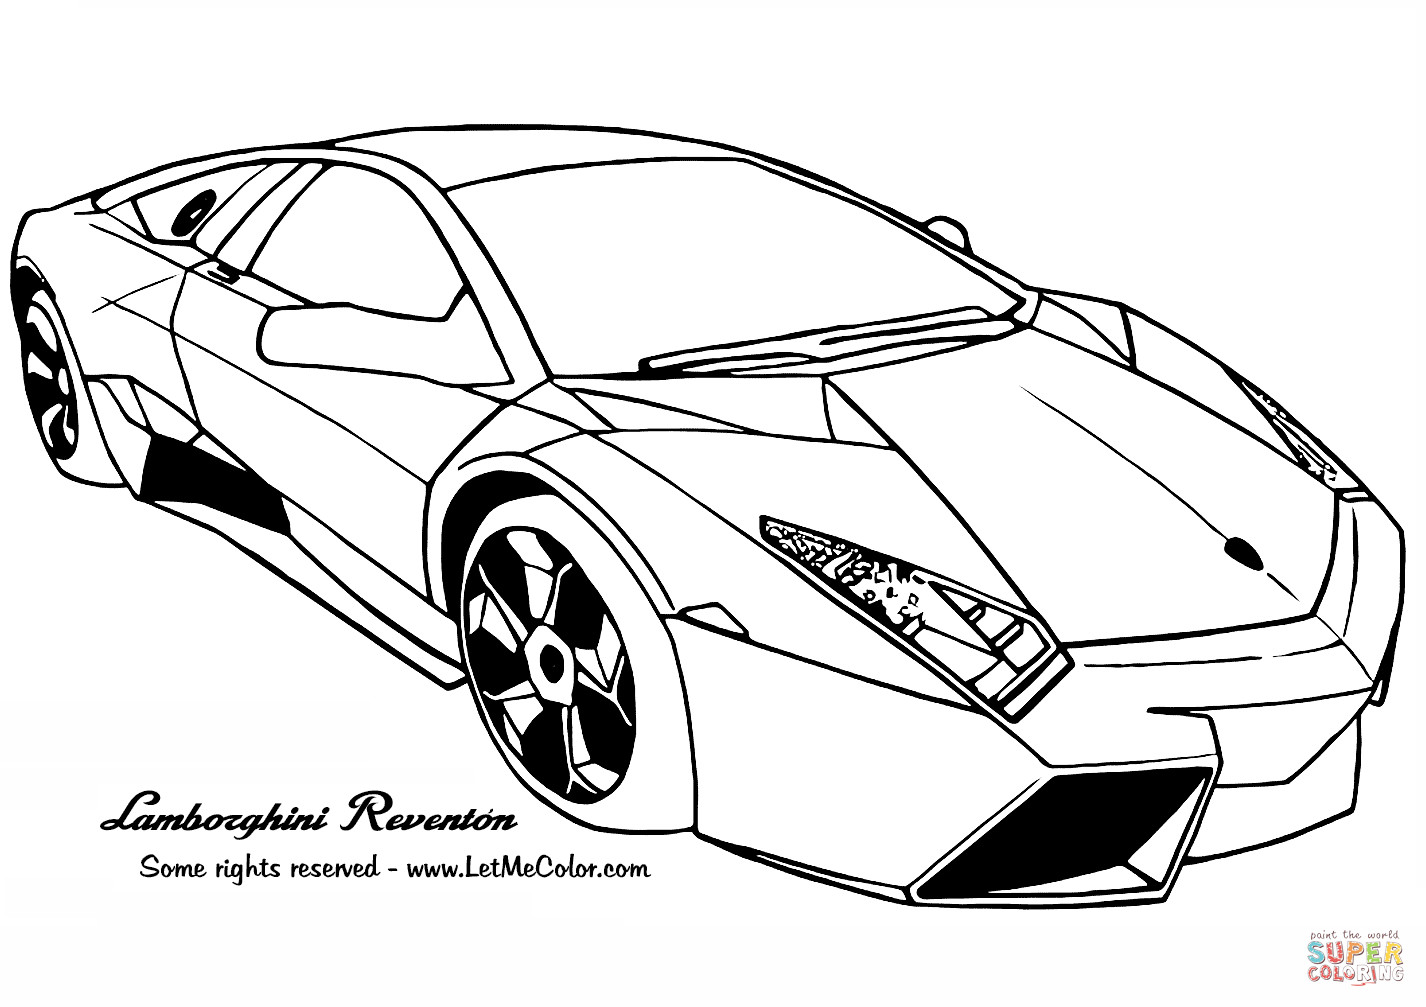 Lamborghini Free Coloring Pages For Boys
 Lamborghini Reventon coloring page